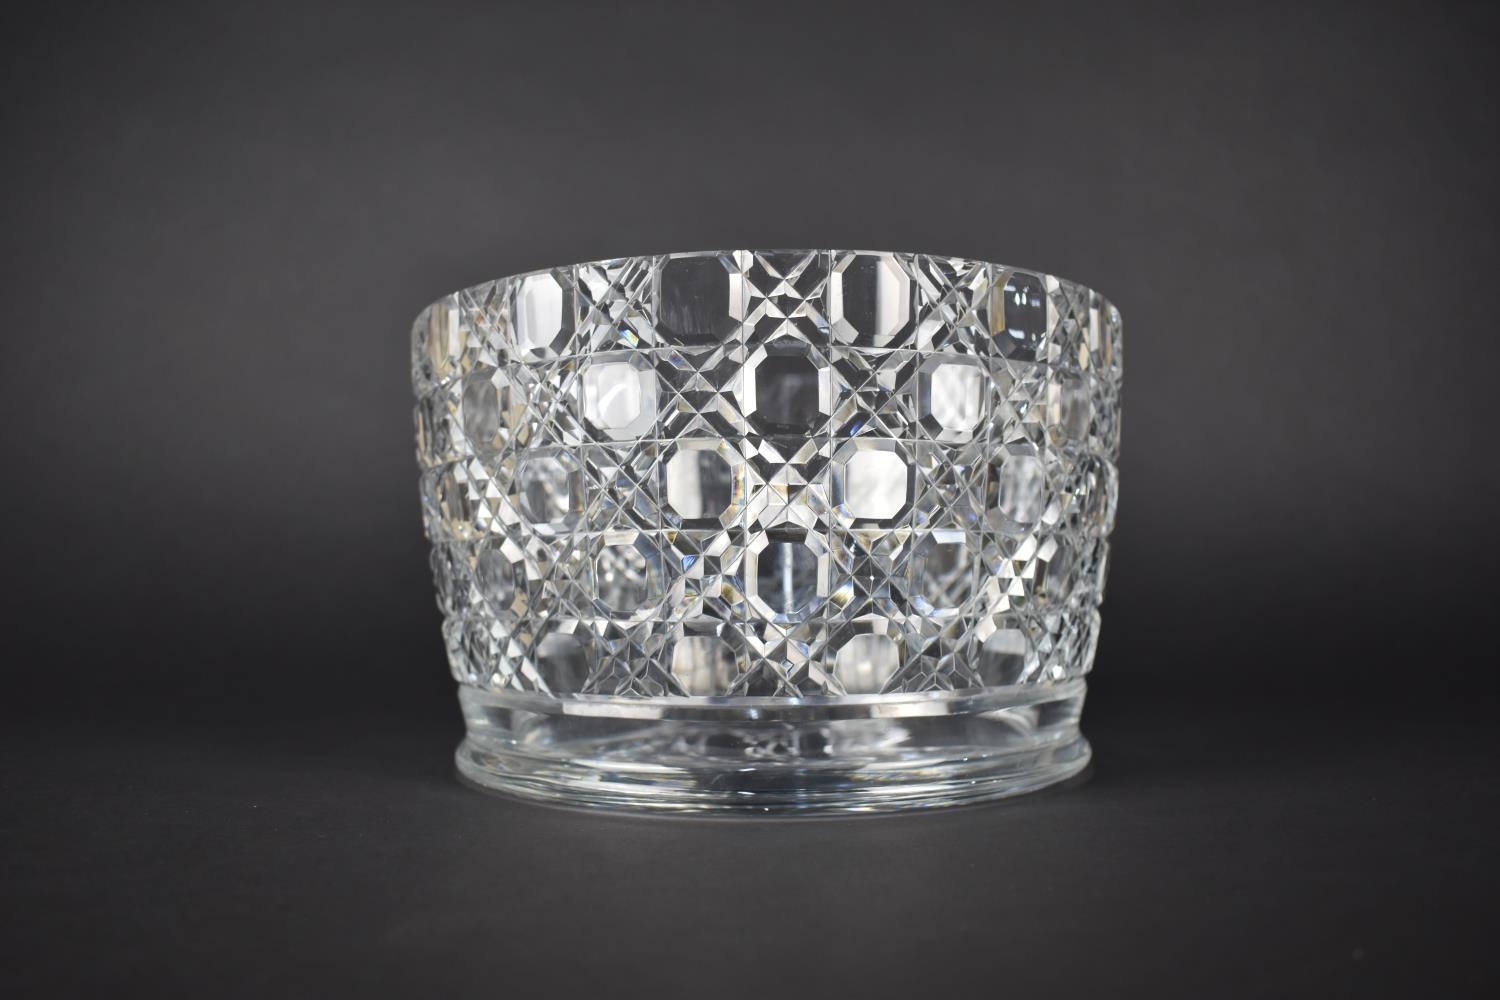 A Large Nice Quality Hobnail Cut Glass Bowl with Polished Pontil Base, 14.5cm high - Image 2 of 3